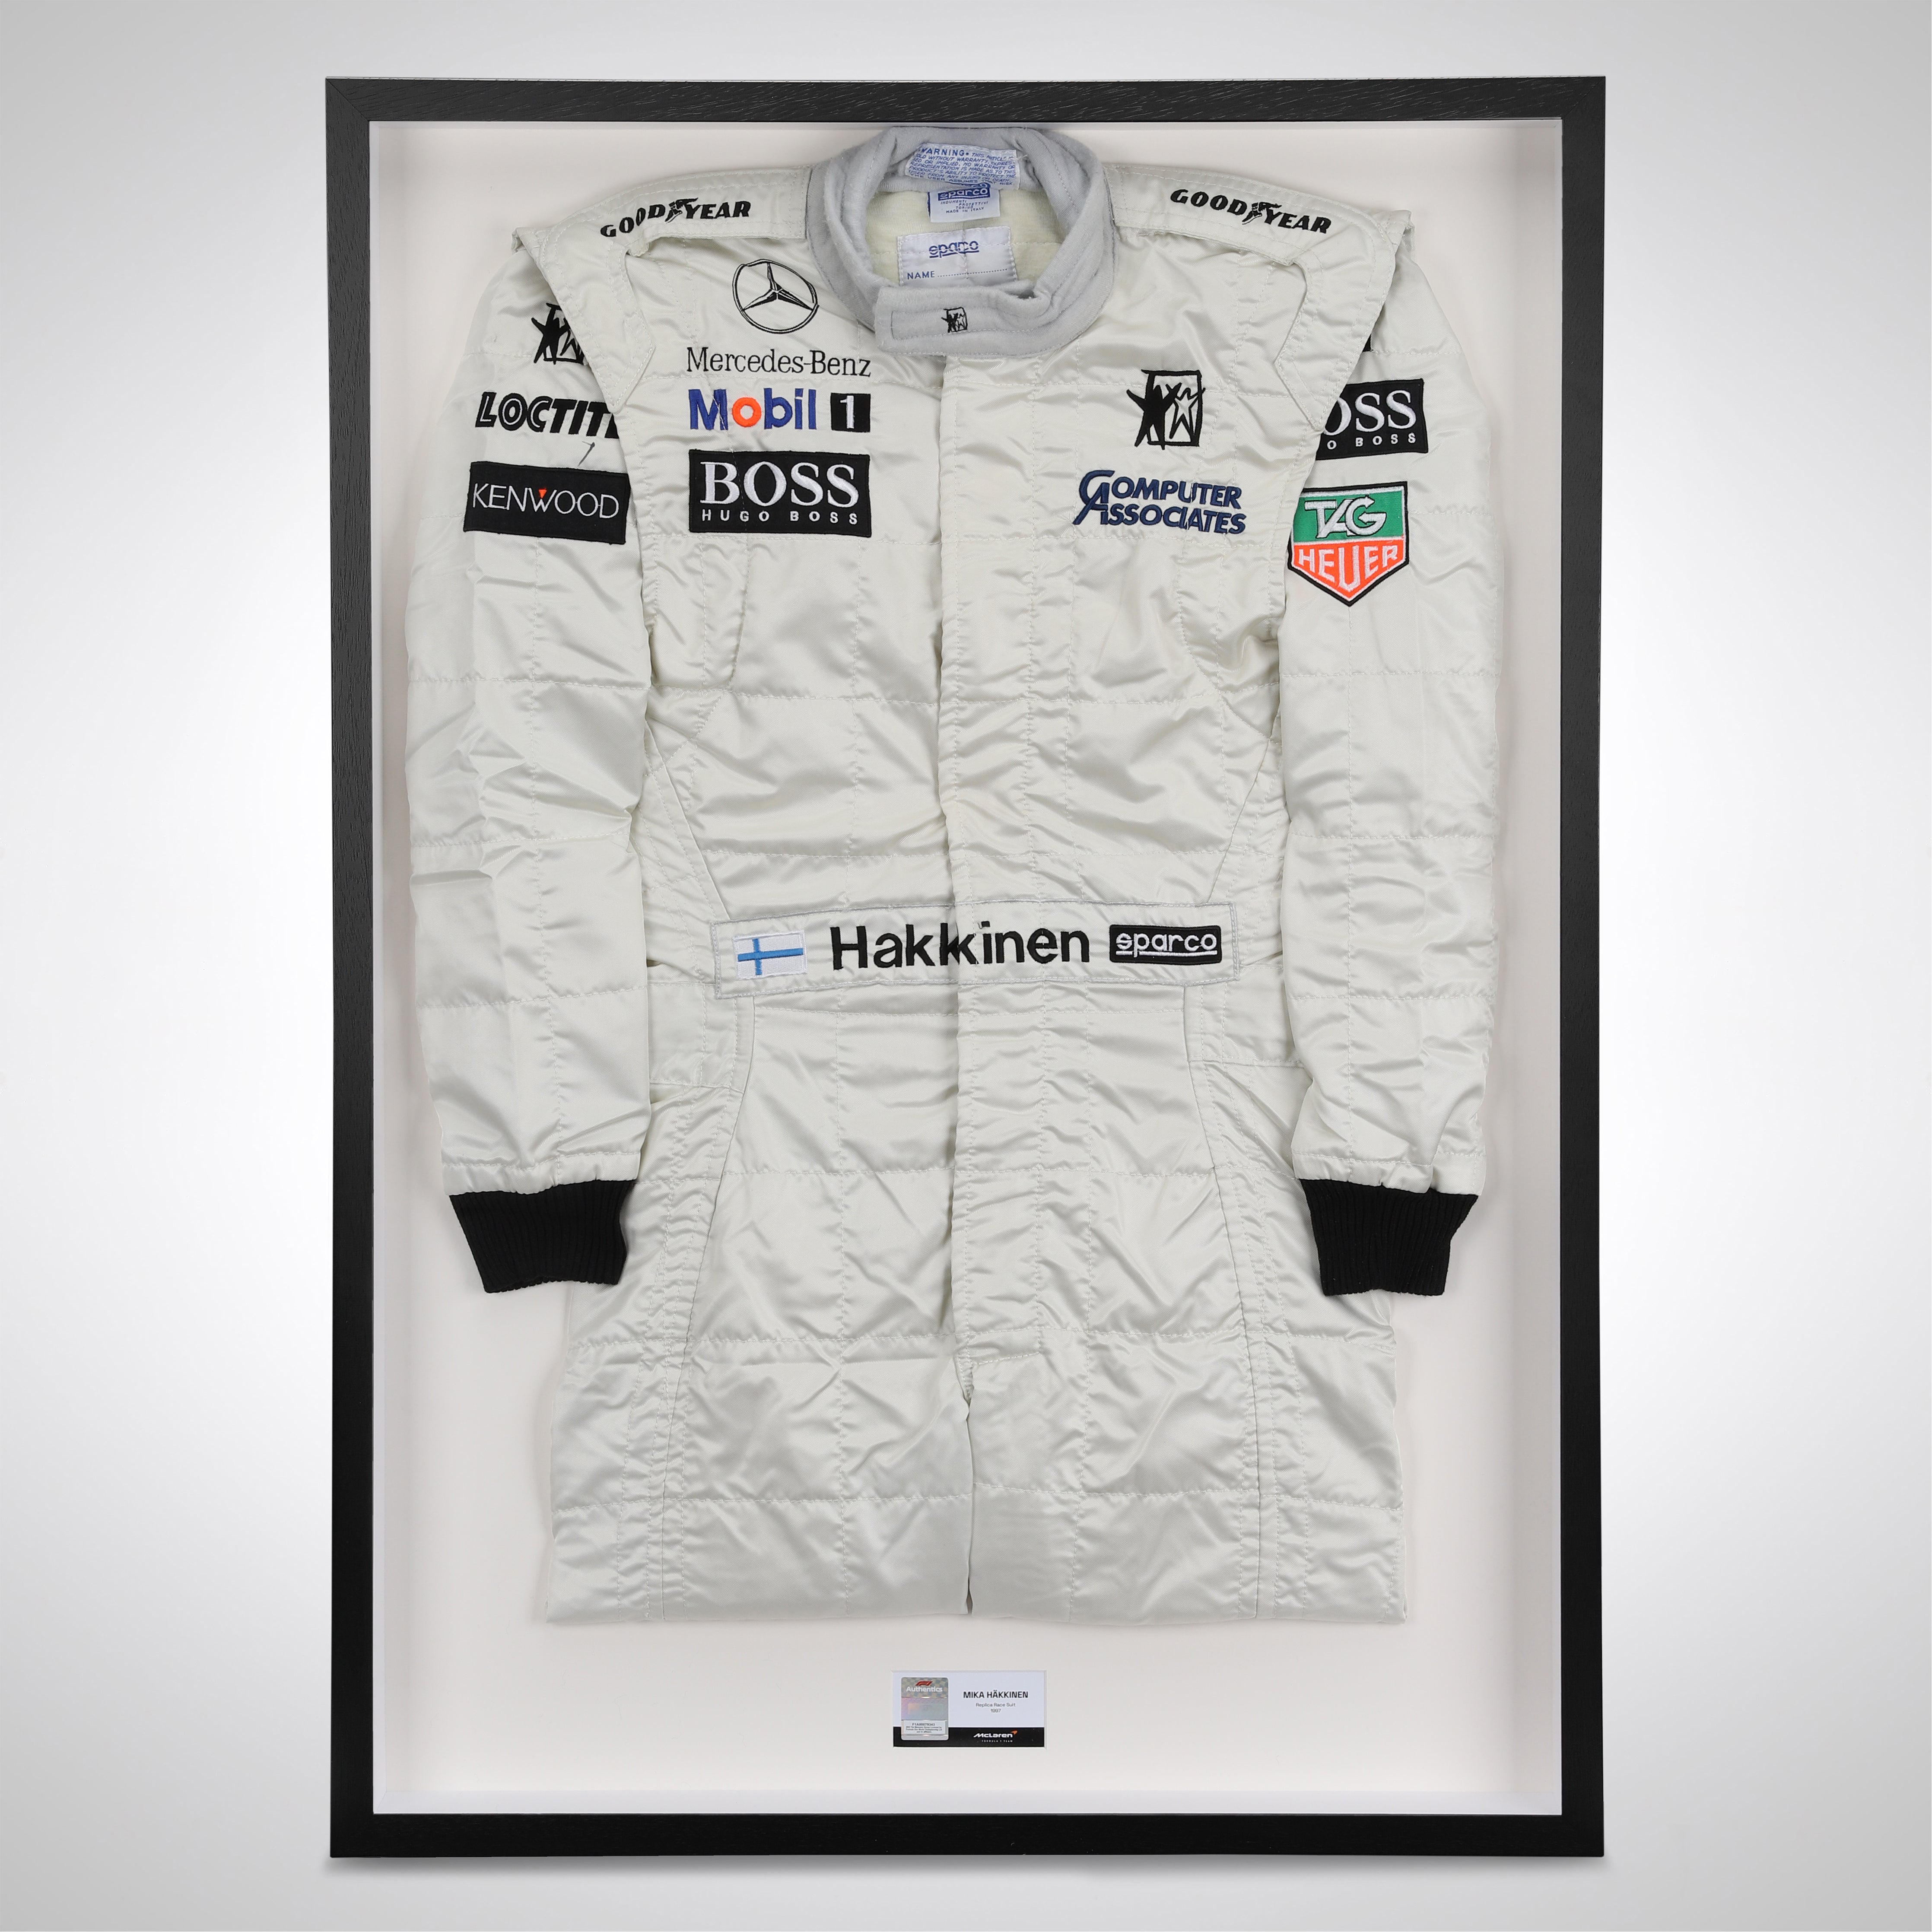 Mika Häkkinen 1997 McLaren Mirror Man, Computer Associates & Boss Branding Replica Race Suit 